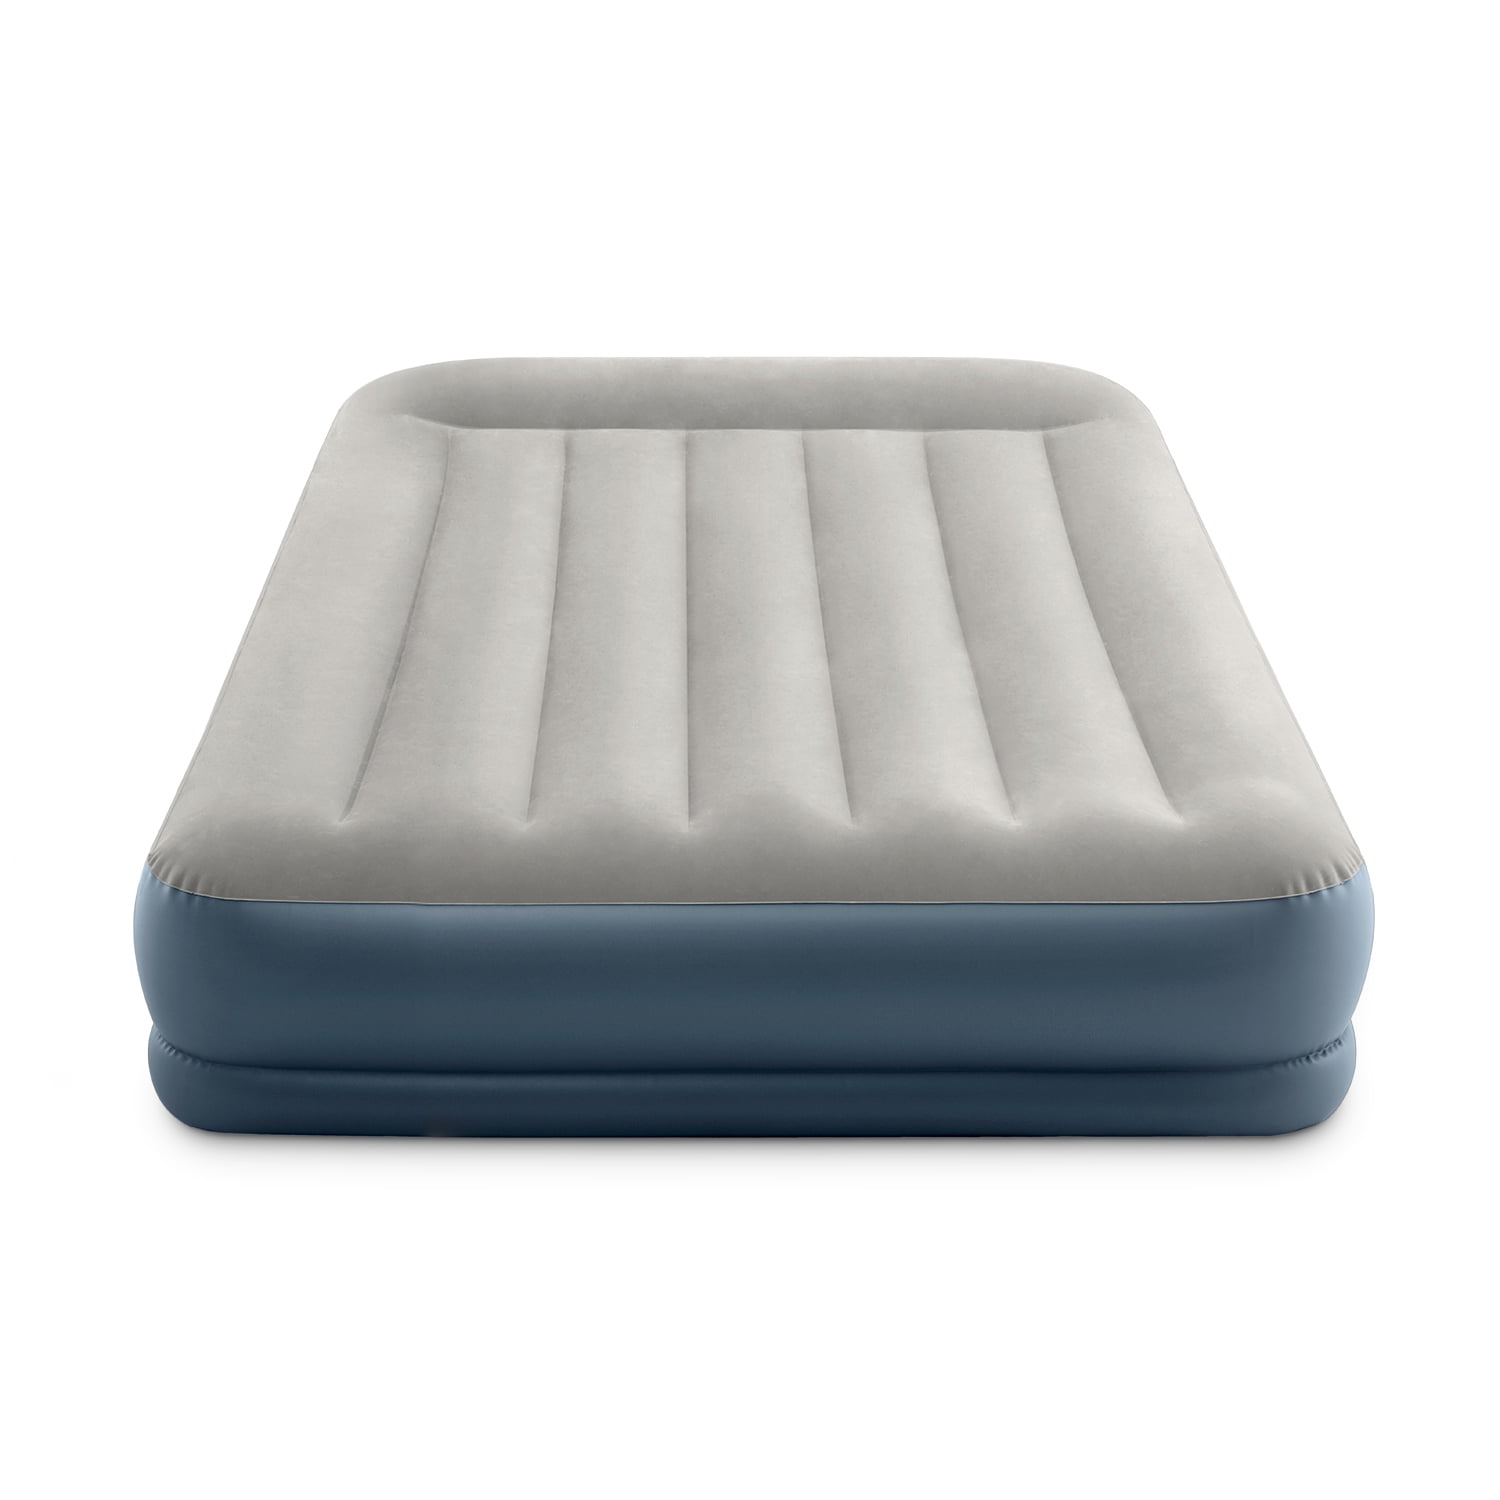 Intex 13" MidRise Pillow Rest DuraBeam Airbed Mattress with Internal Pump FULL